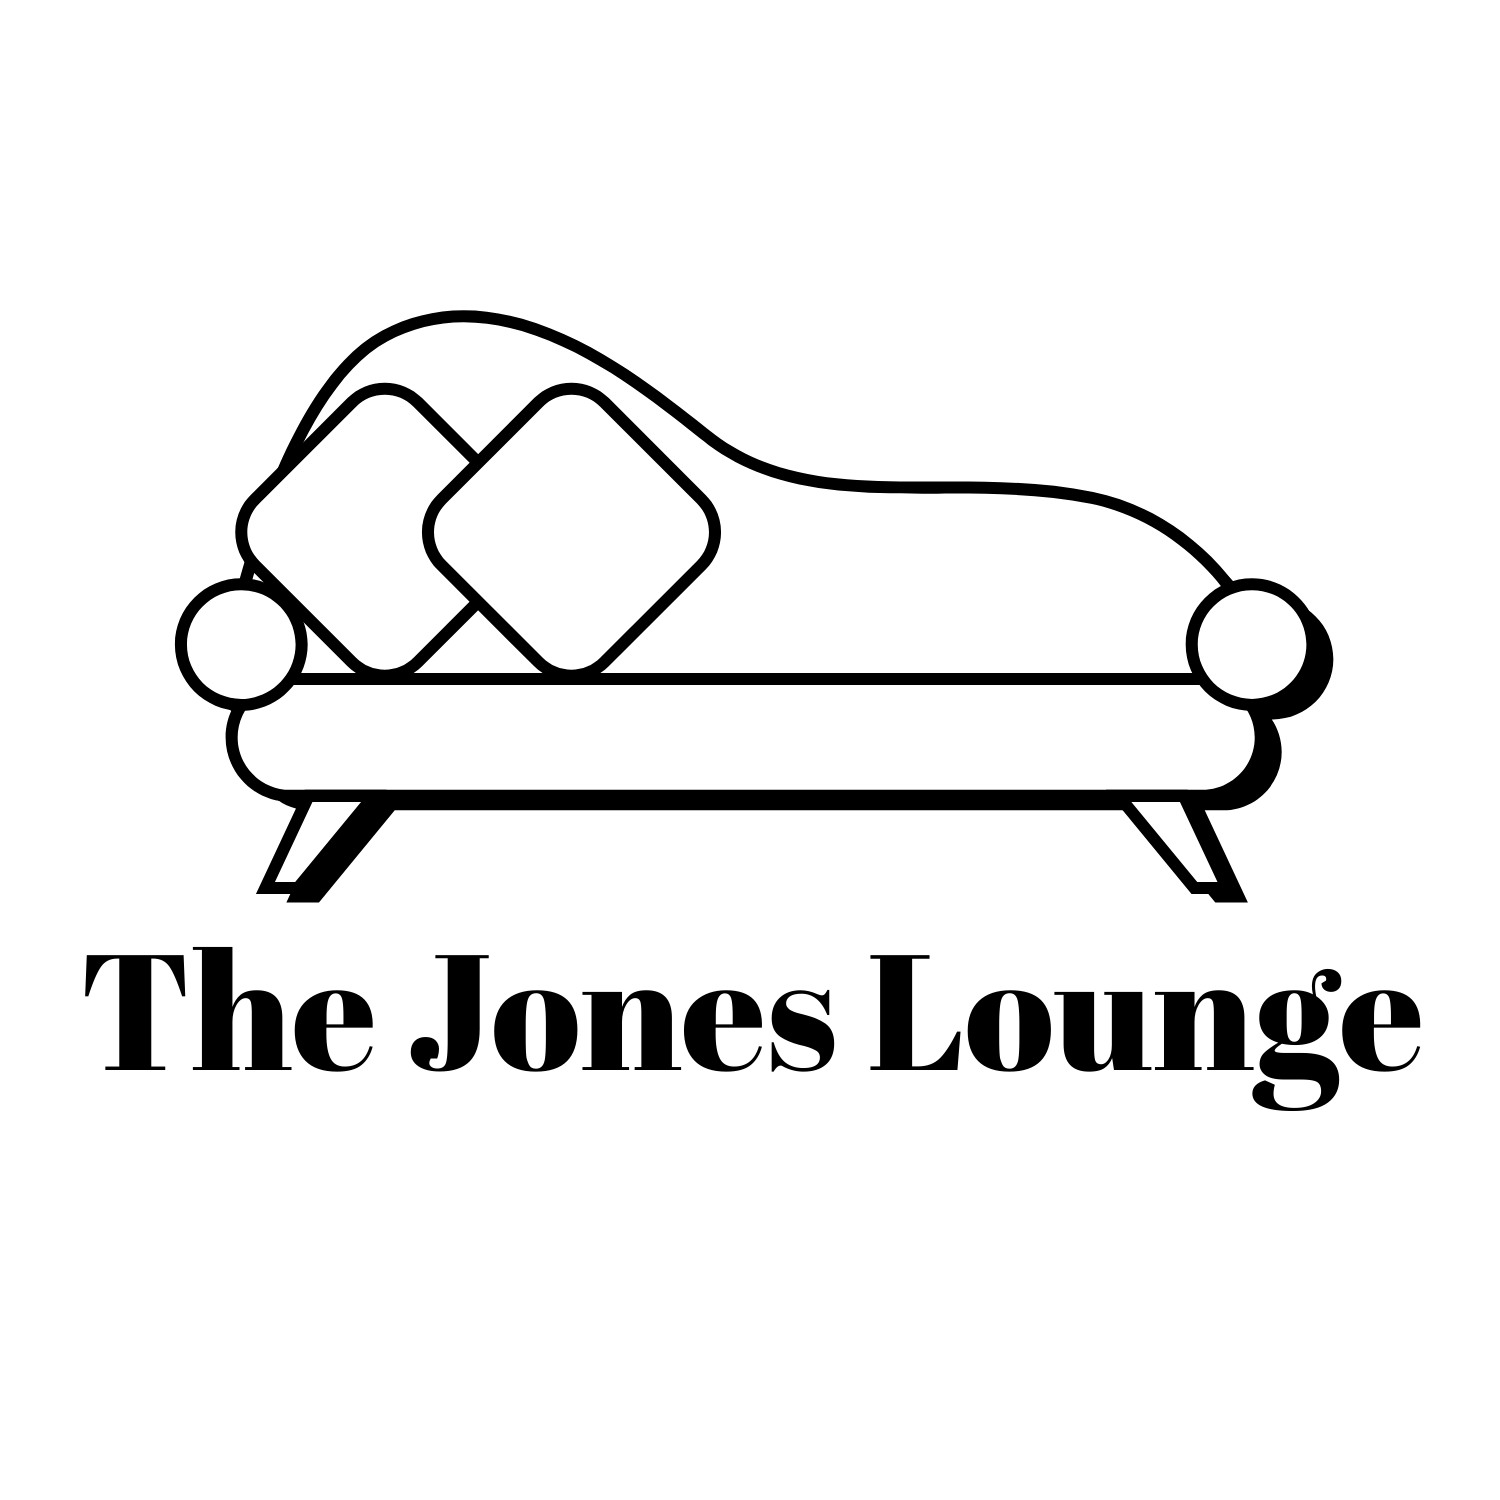 The Jones Lounge